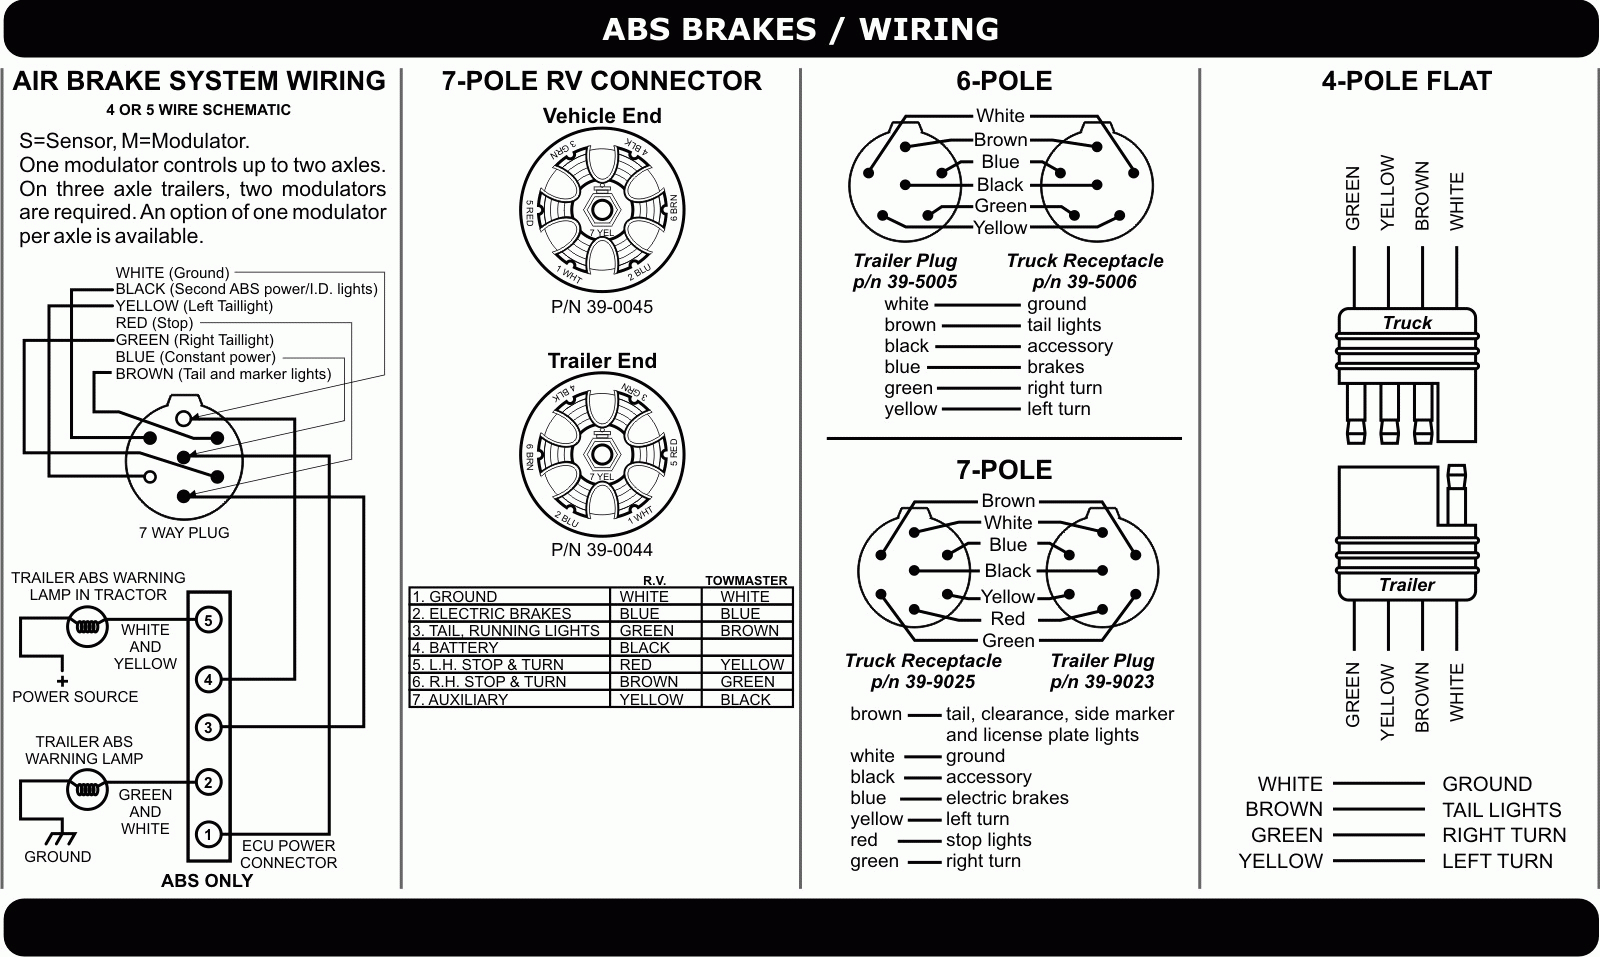 Trailer Abs Wiring Diagrams | Manual E-Books - Wabco Trailer Abs Wiring Diagram